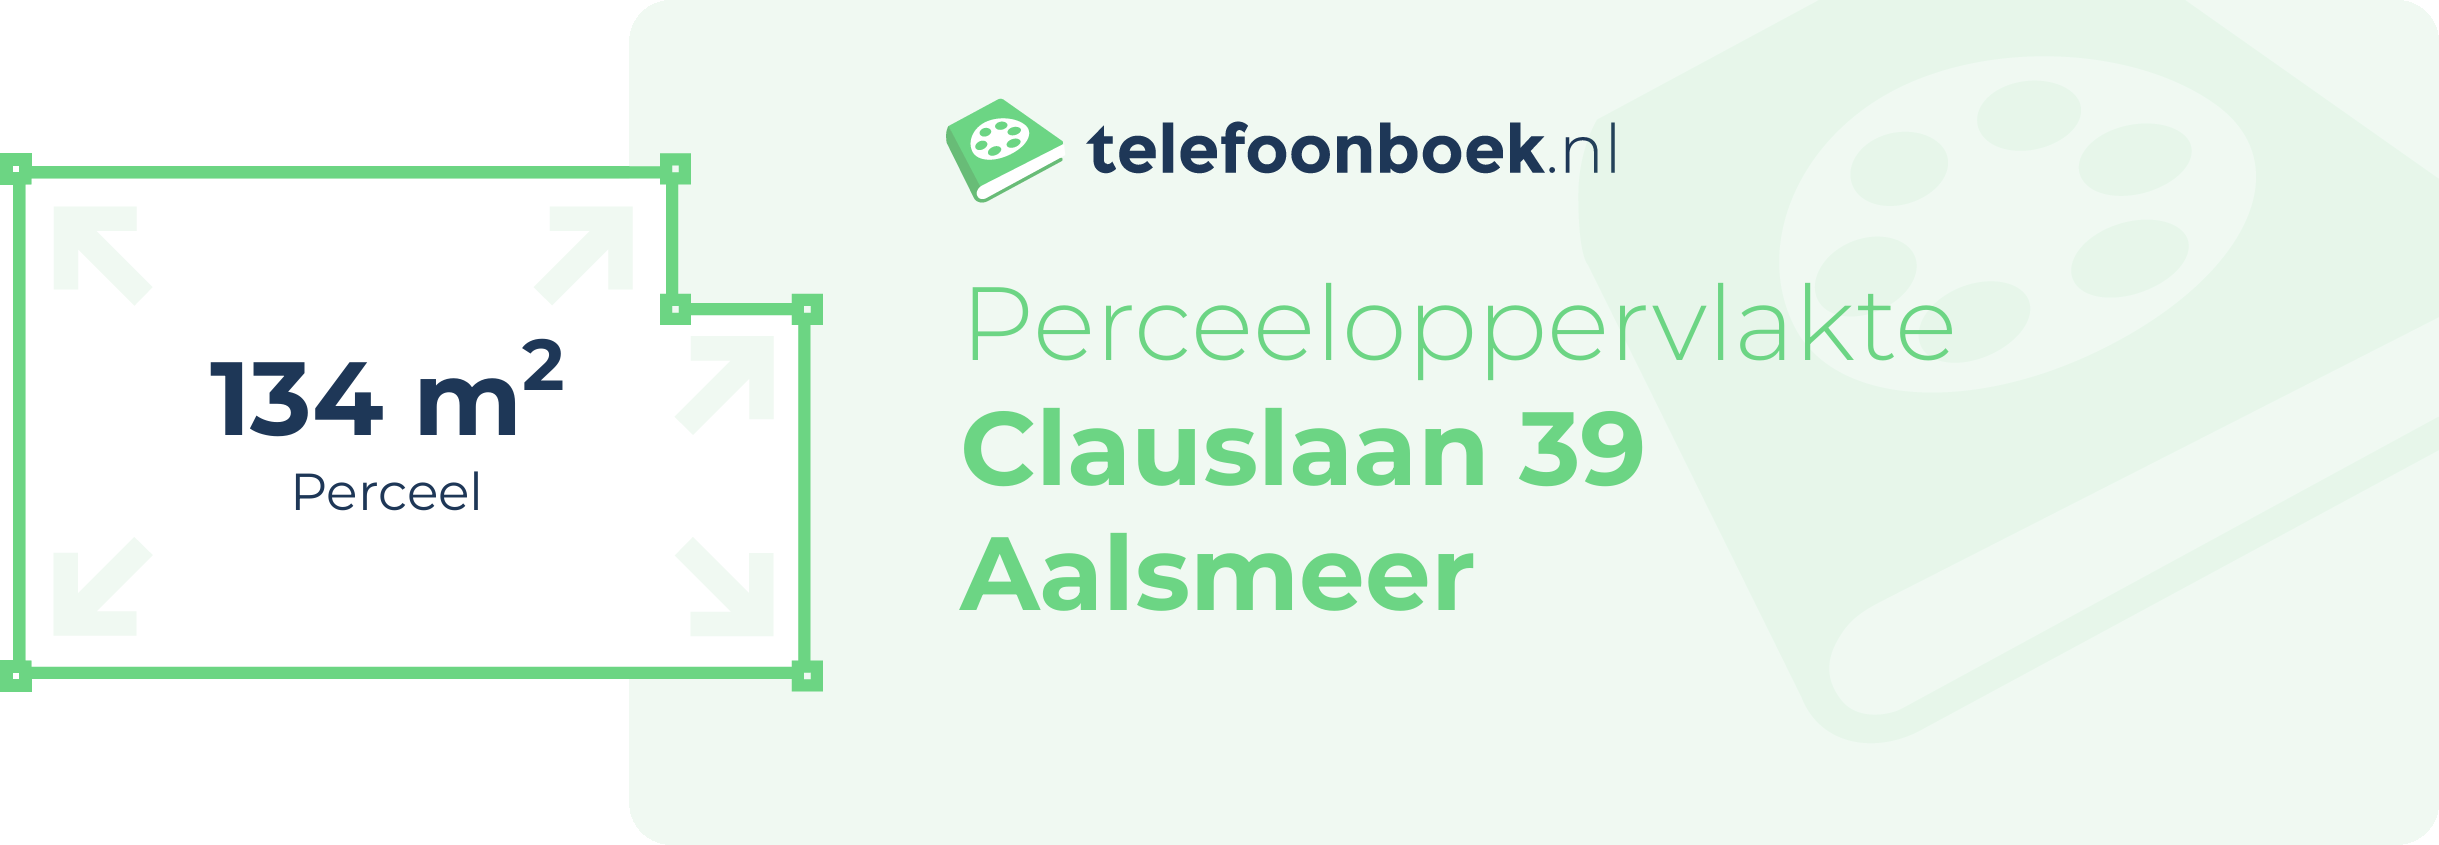 Perceeloppervlakte Clauslaan 39 Aalsmeer